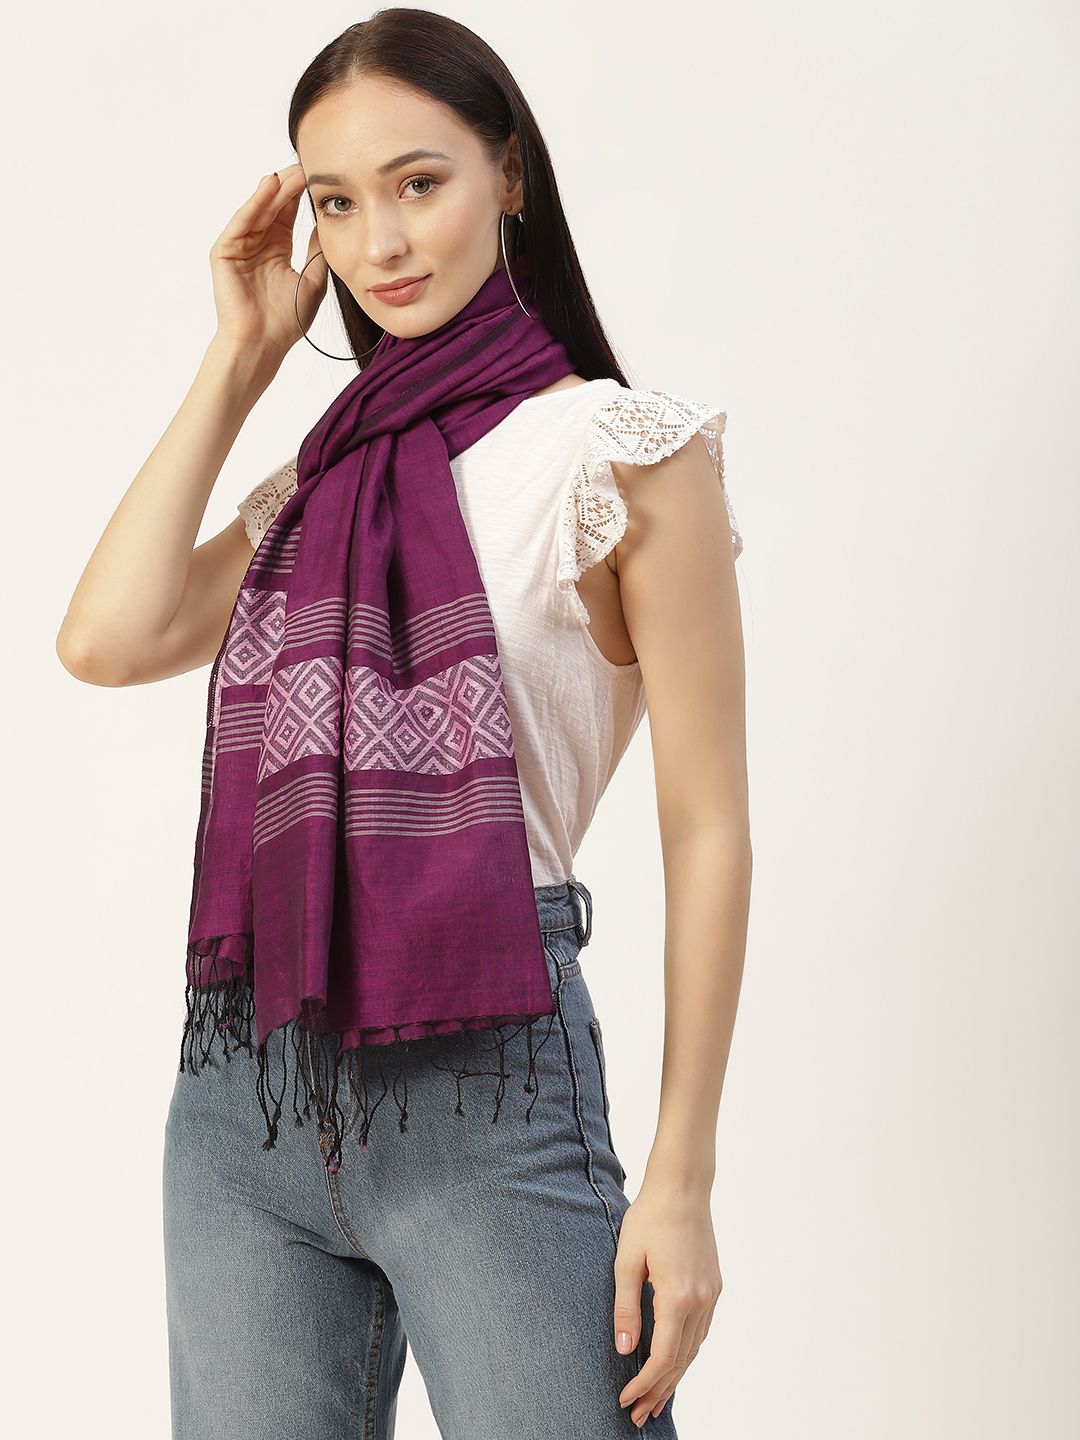 ArtEastri Women Purple Handloom Cotton Stole Price in India